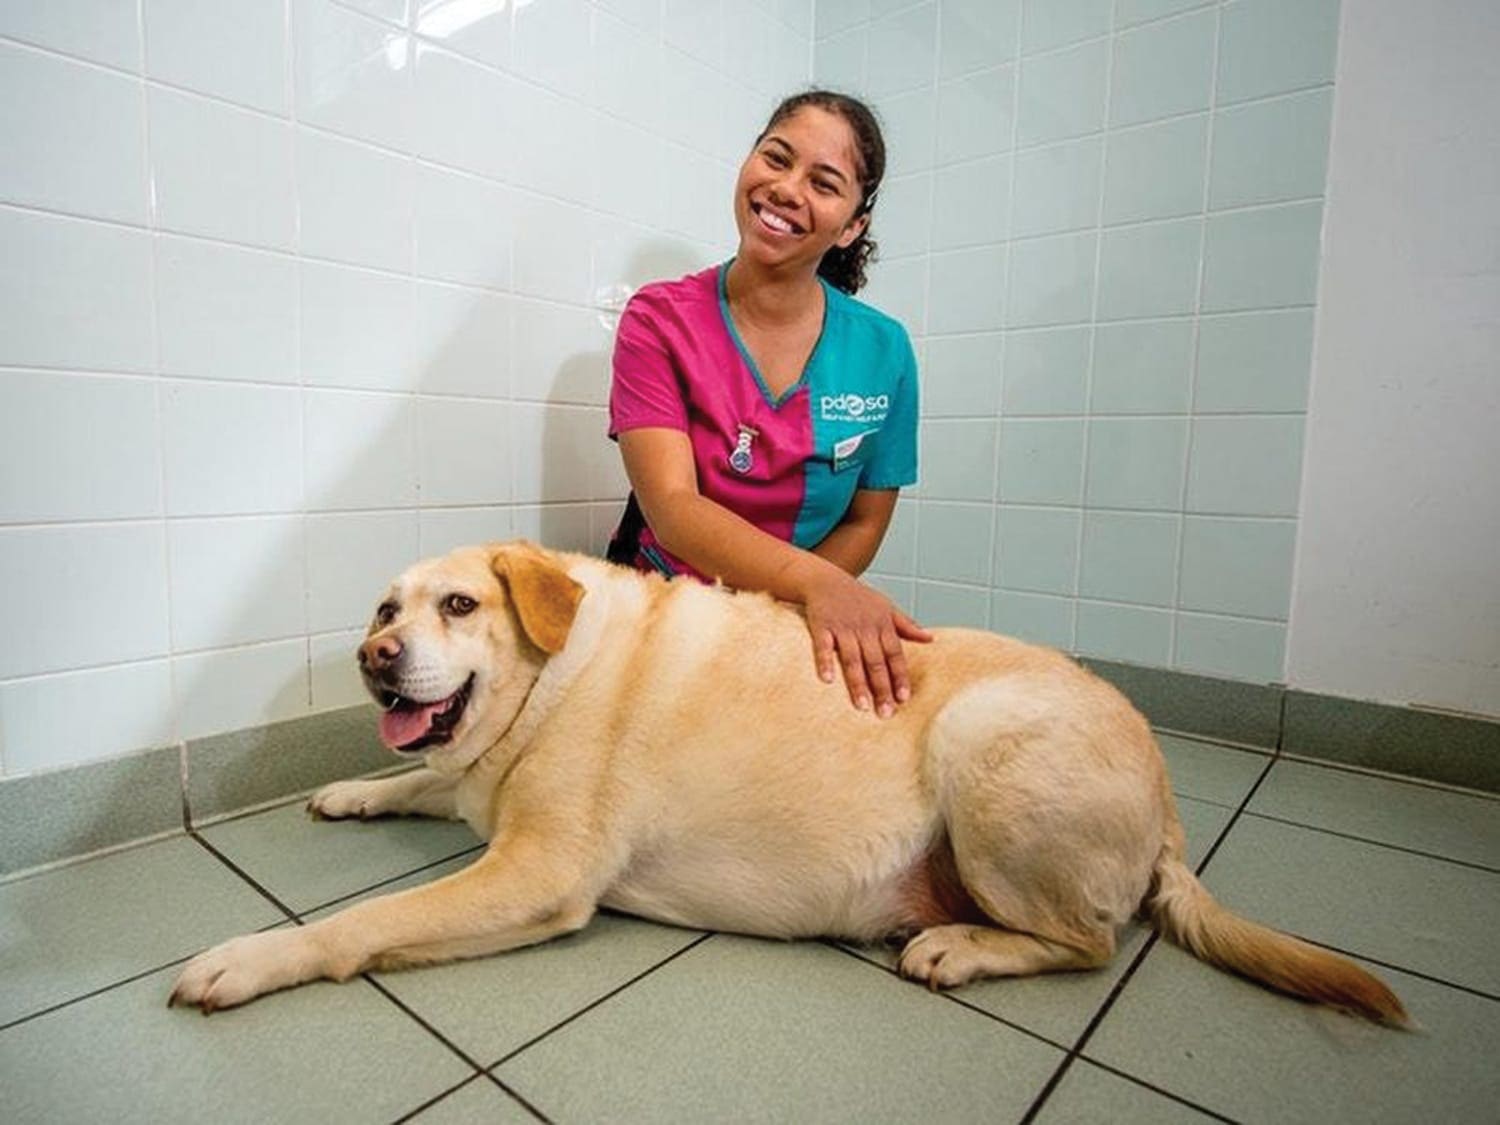 pet slimmer sheds dog body weight